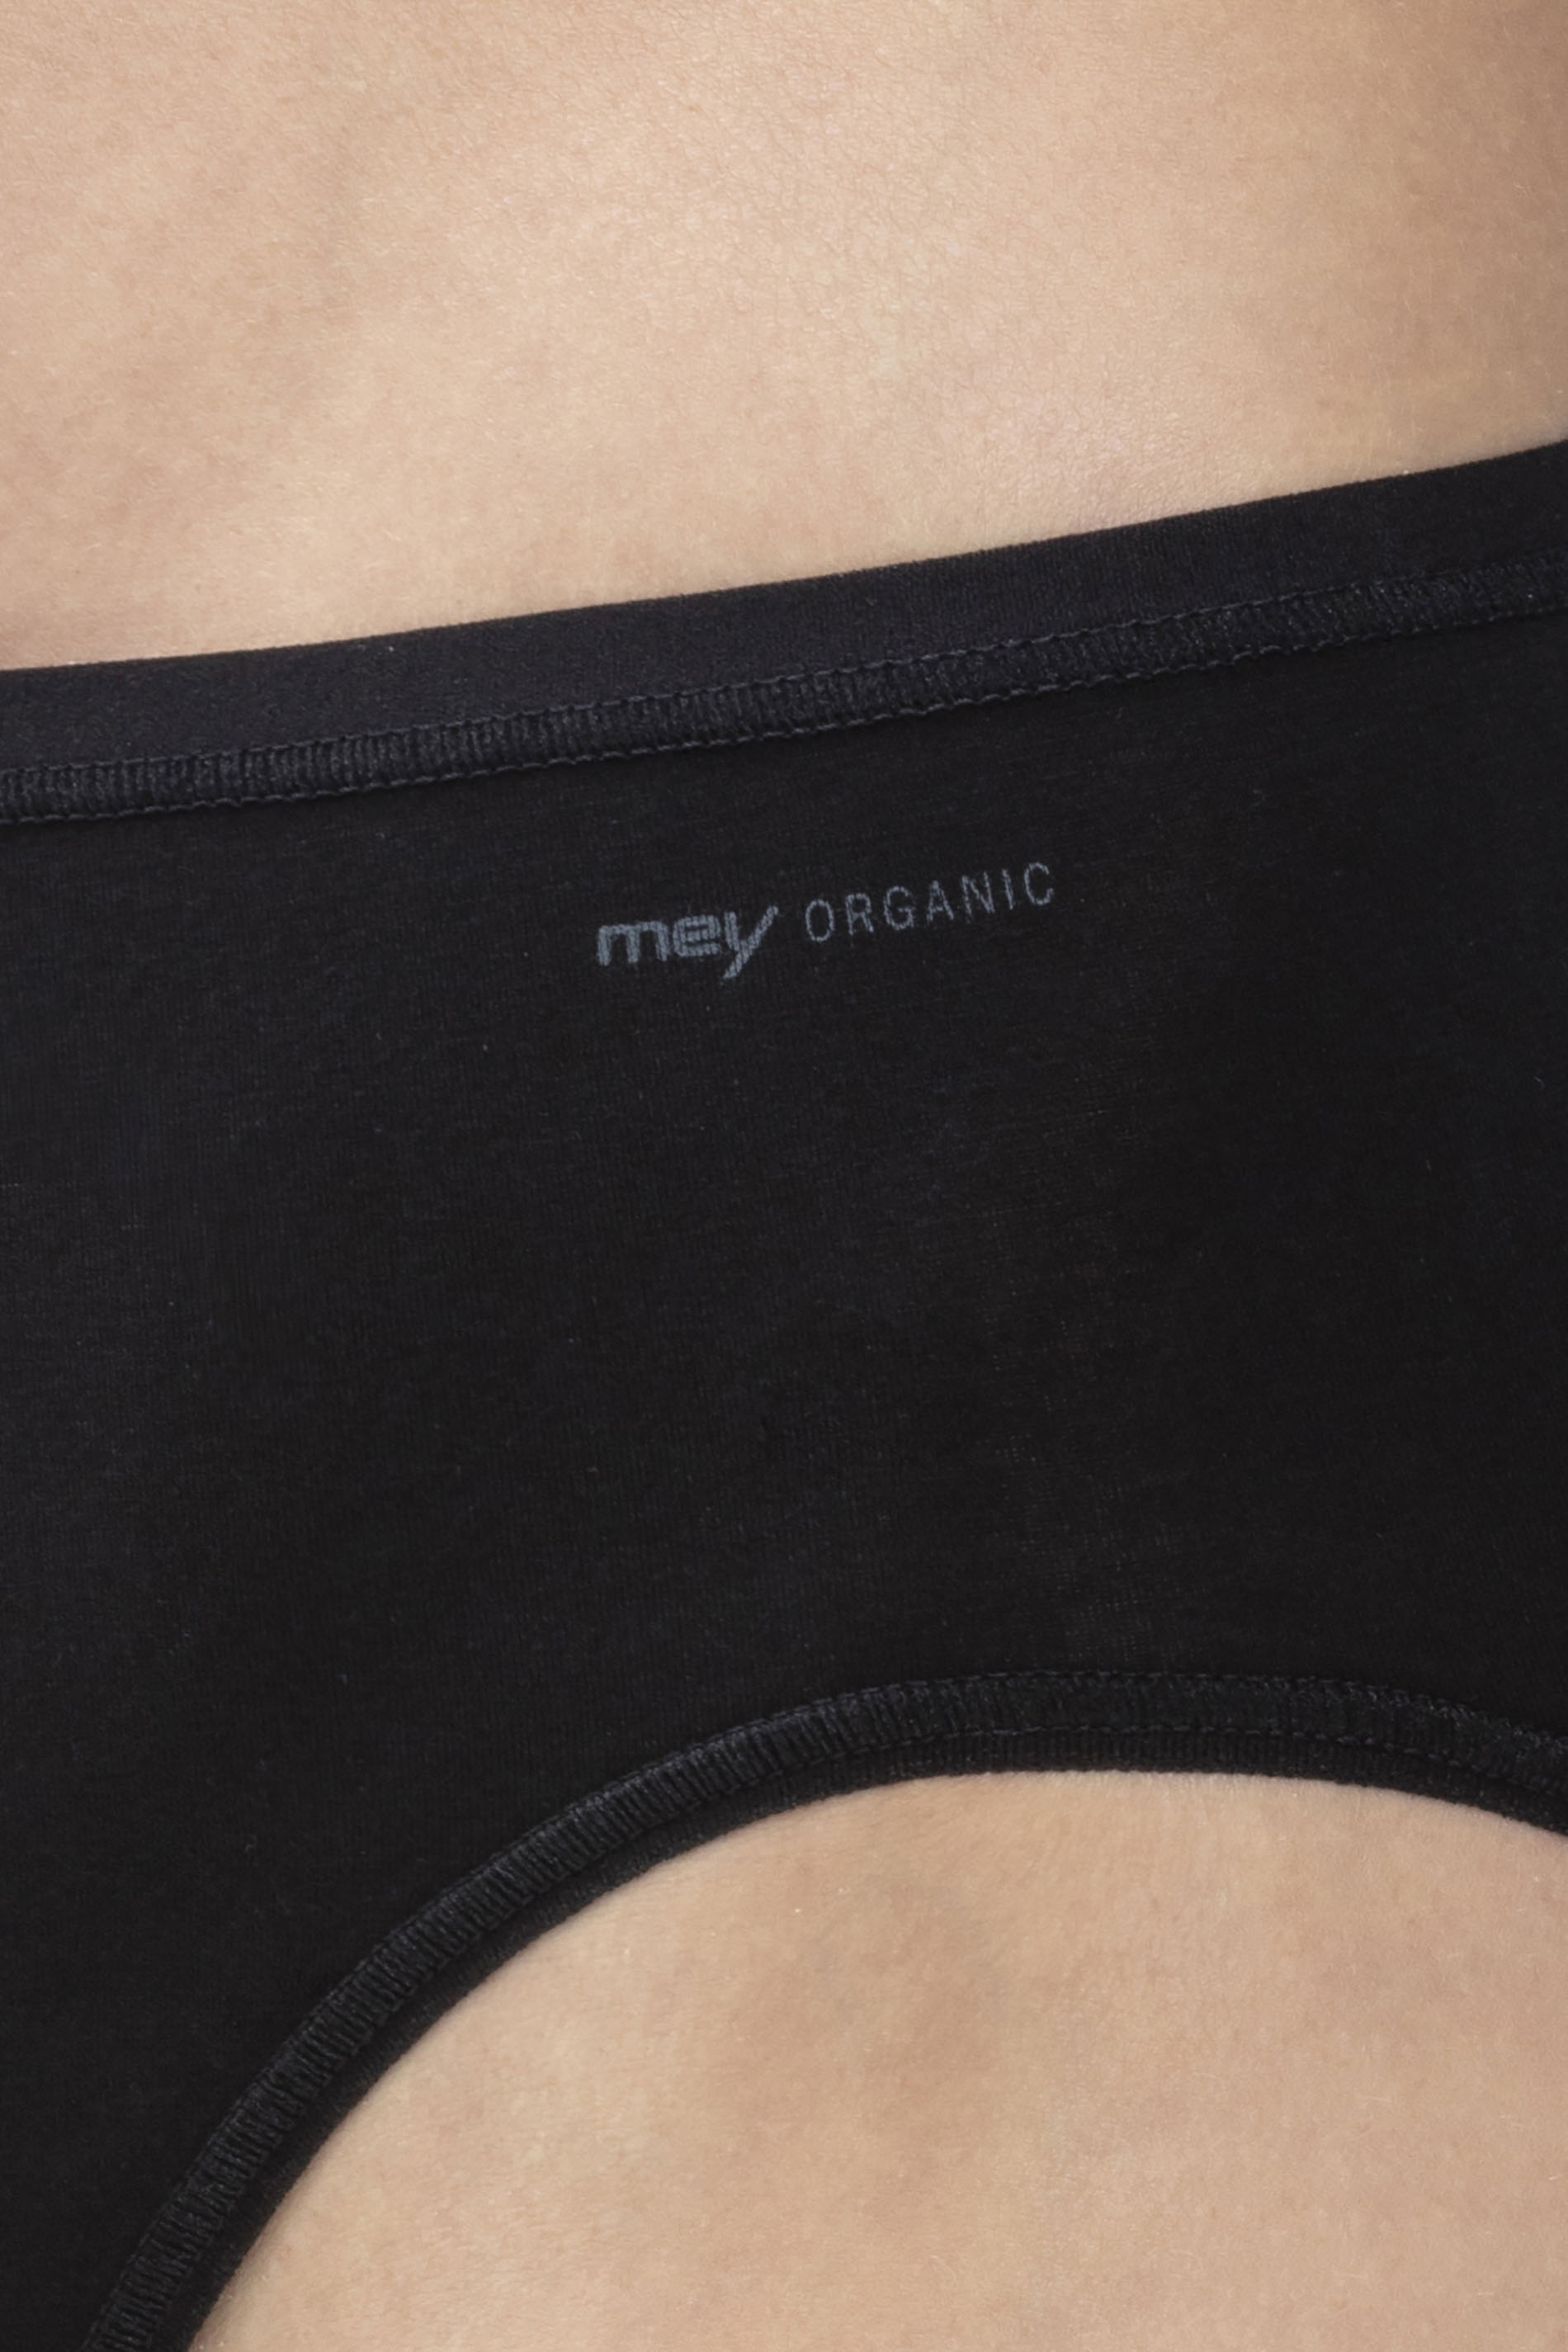 American-Pants Black Serie Superfine Organic Detail View 01 | mey®